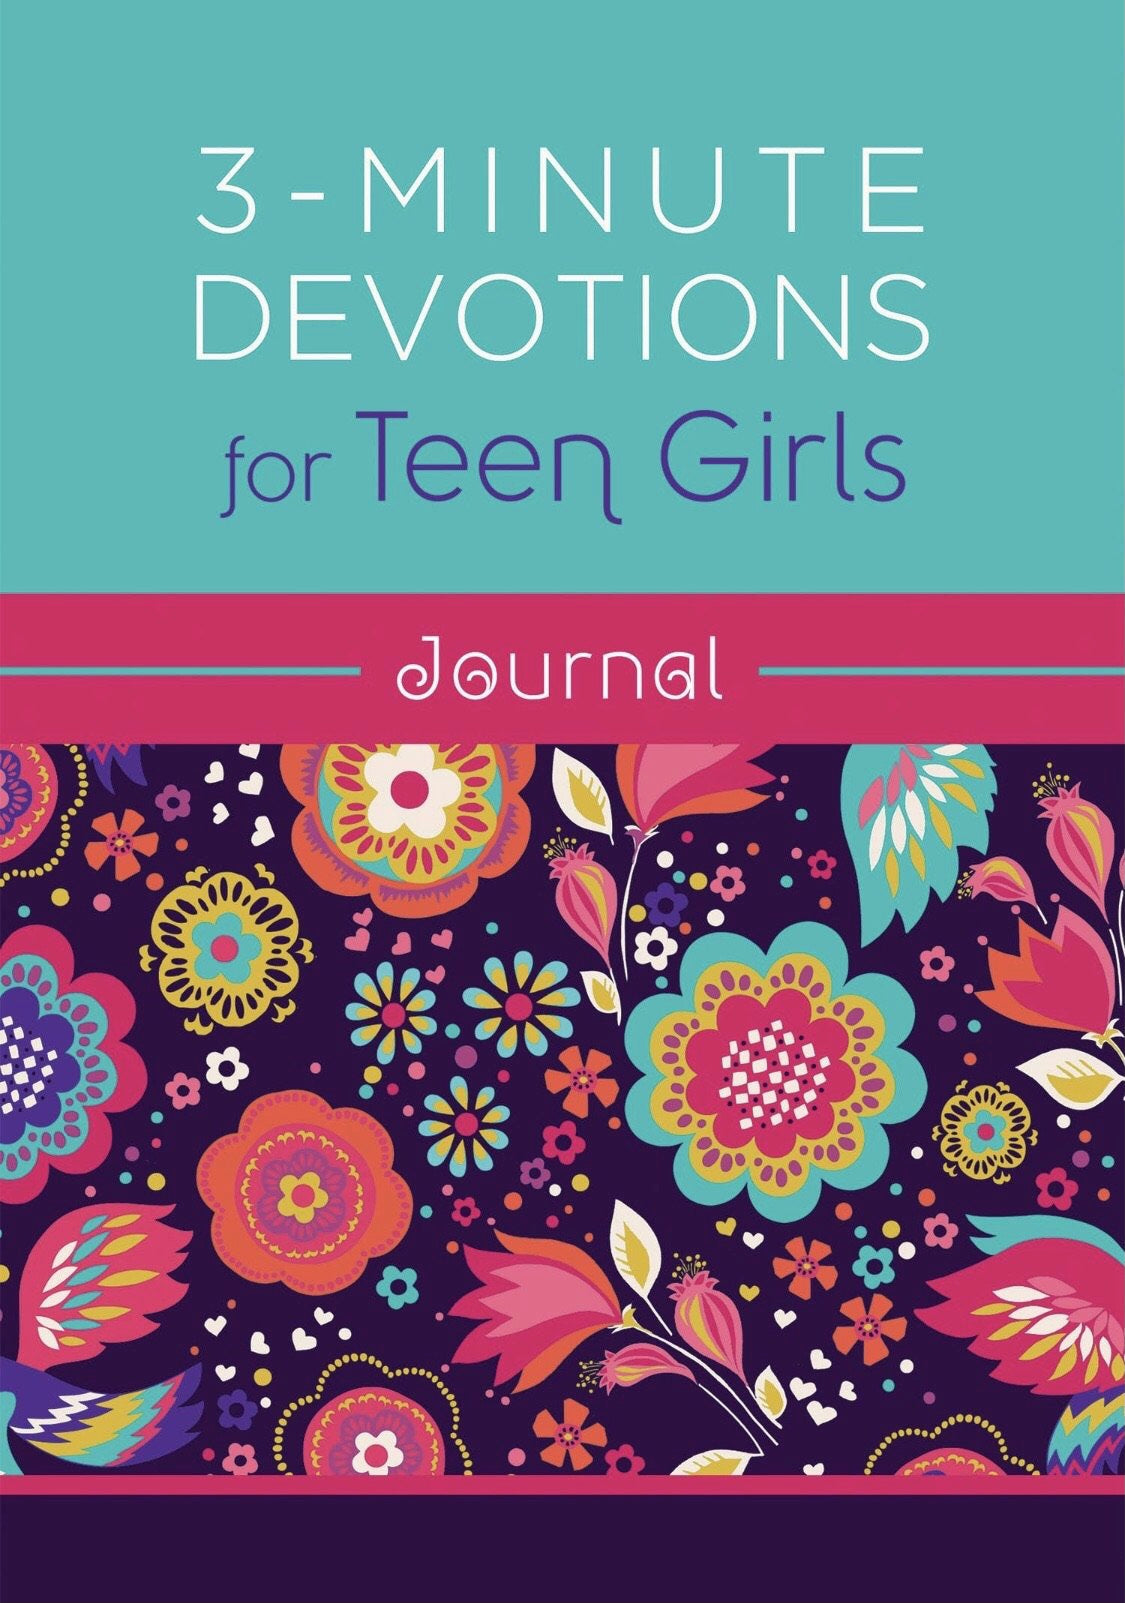 3 Minute Devotions for Teen Girls Journal